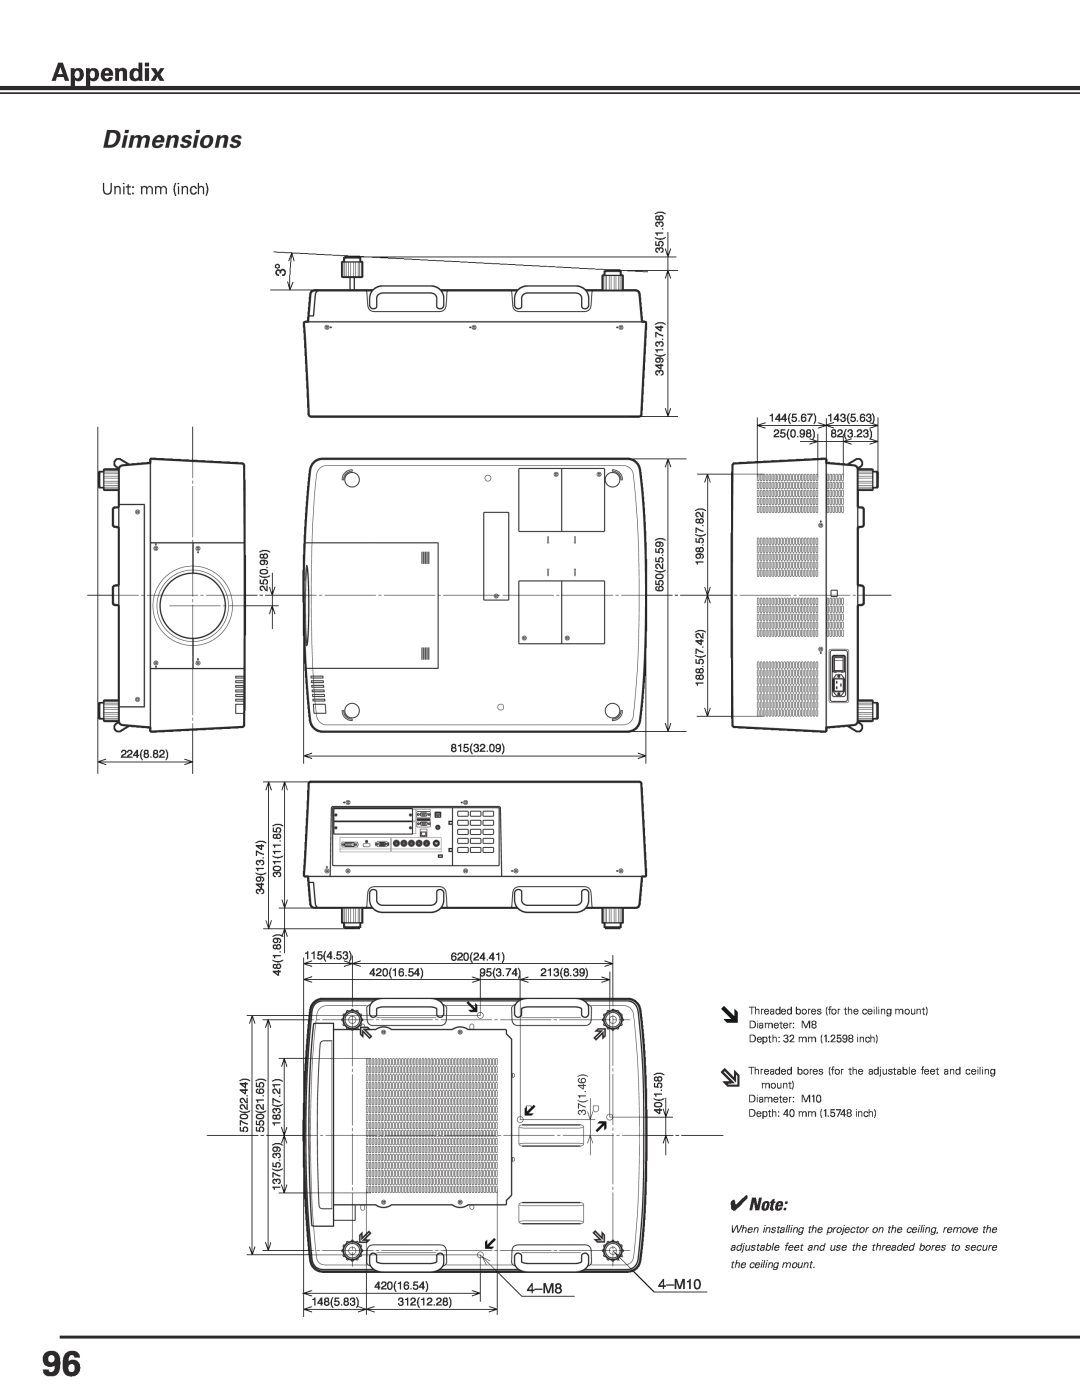 Sanyo HF15000L owner manual Dimensions, Appendix, Unit: mm inch, 4–M8, 4–M10 